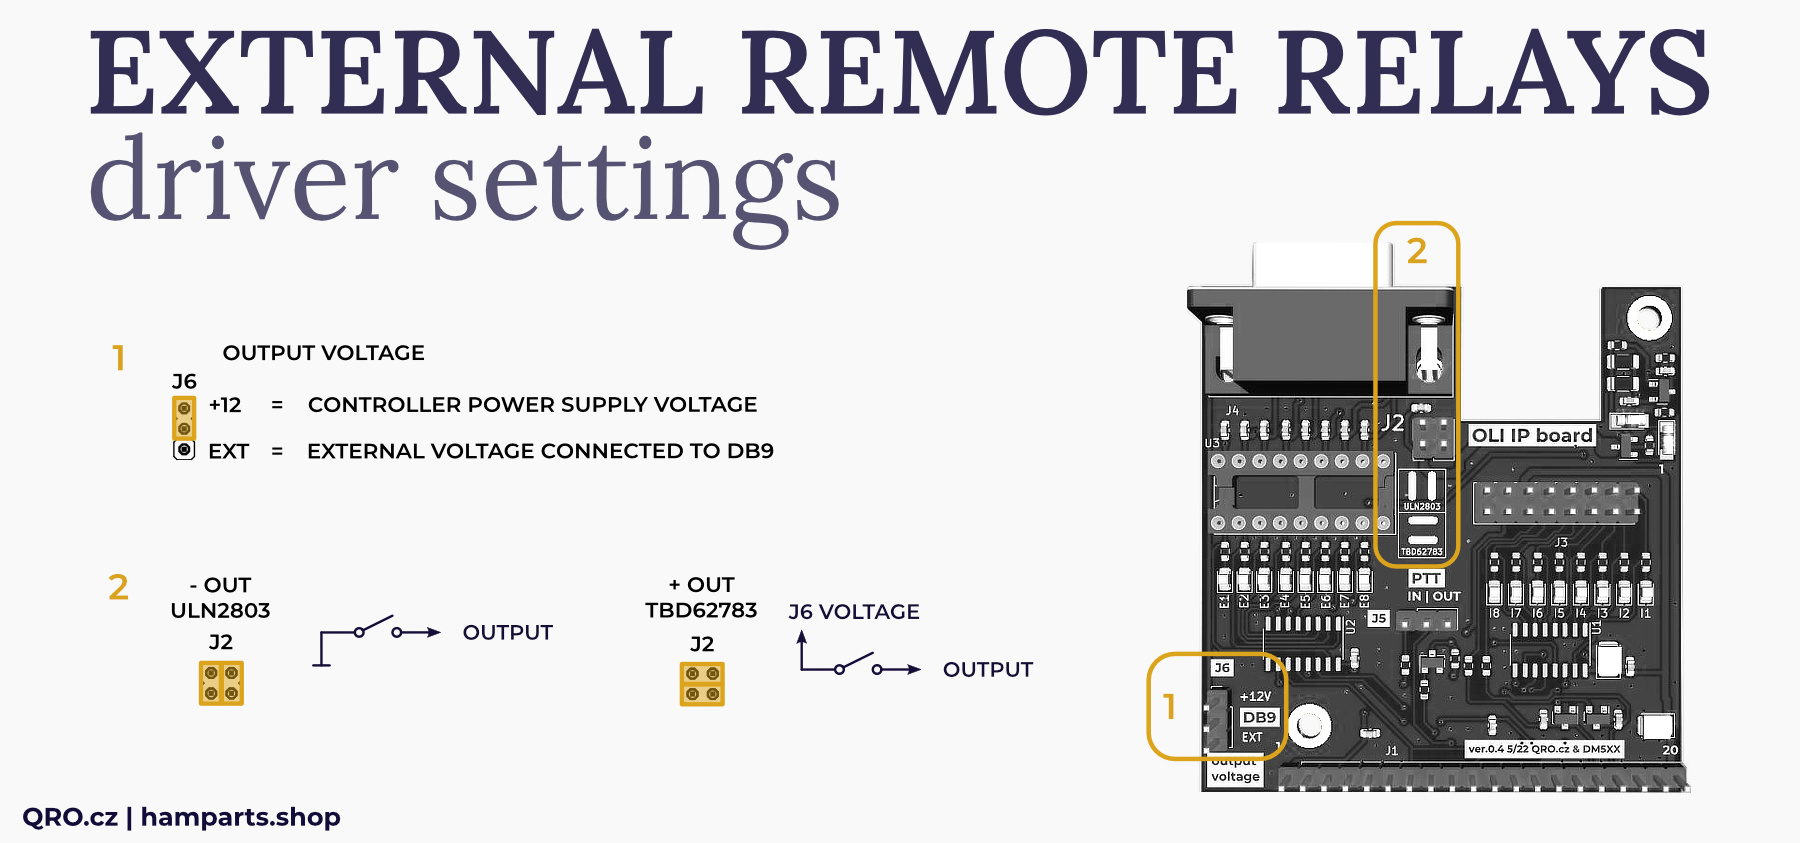 easy controller external remote relays settings oli ip jumper settings qro.cz hamparts.shop